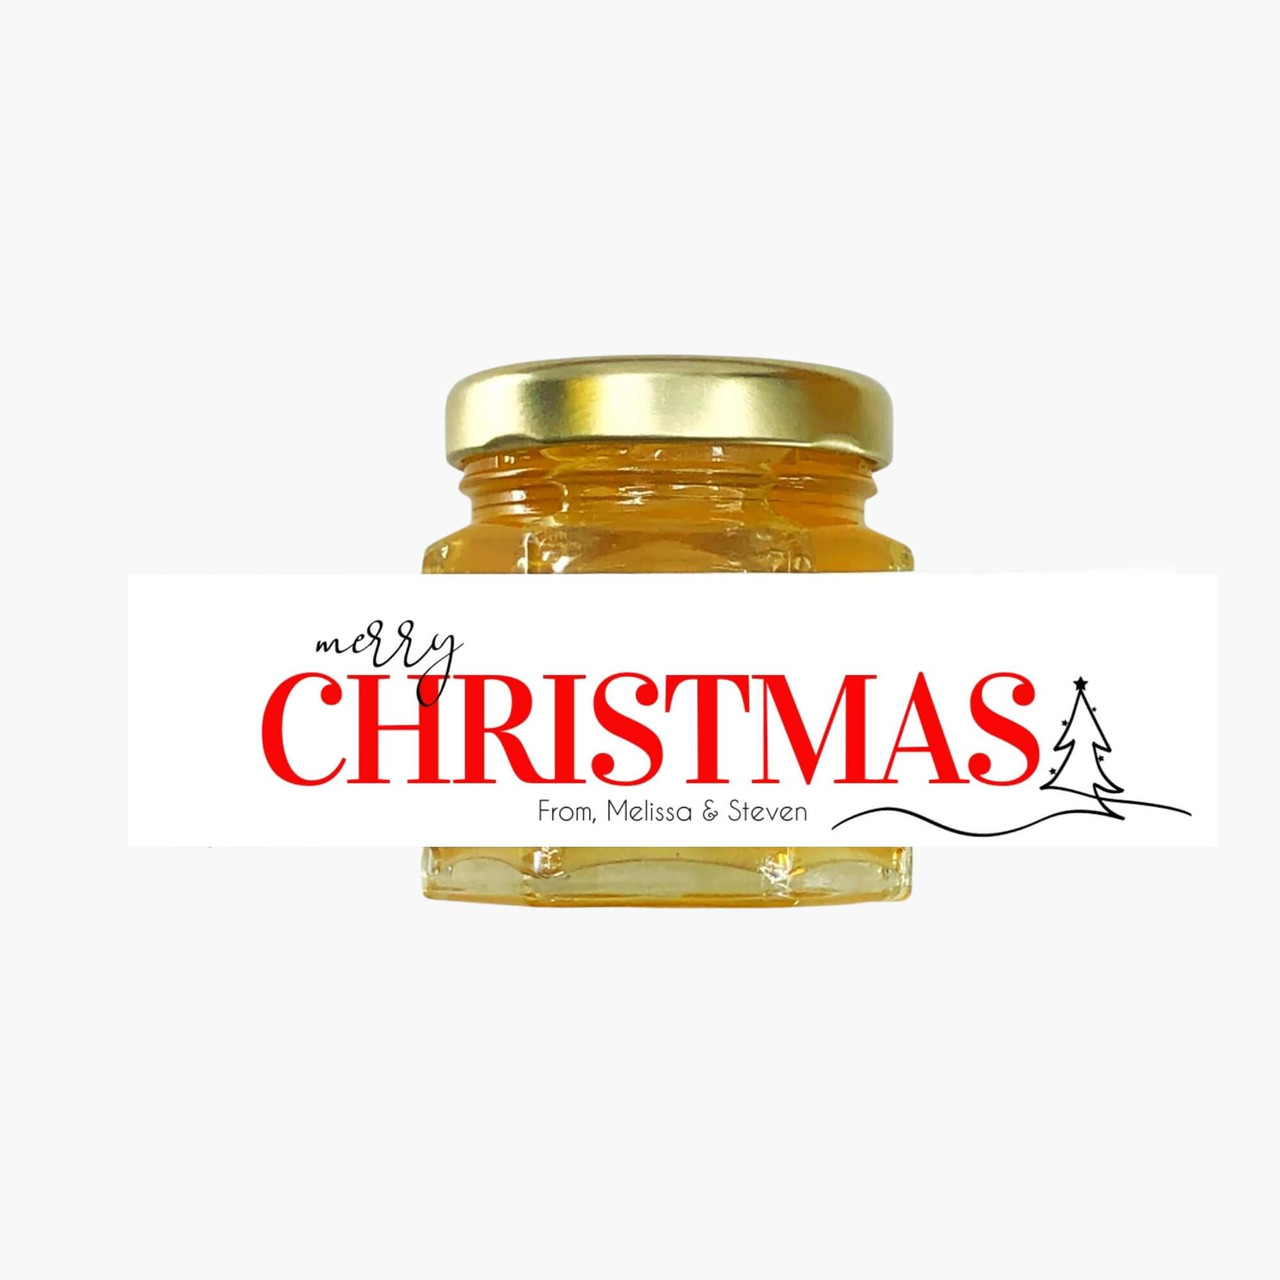 https://cdn11.bigcommerce.com/s-f2rq87de1j/images/stencil/1280x1280/products/297/1515/Merry_Christmas__92500.1698948618.jpg?c=1